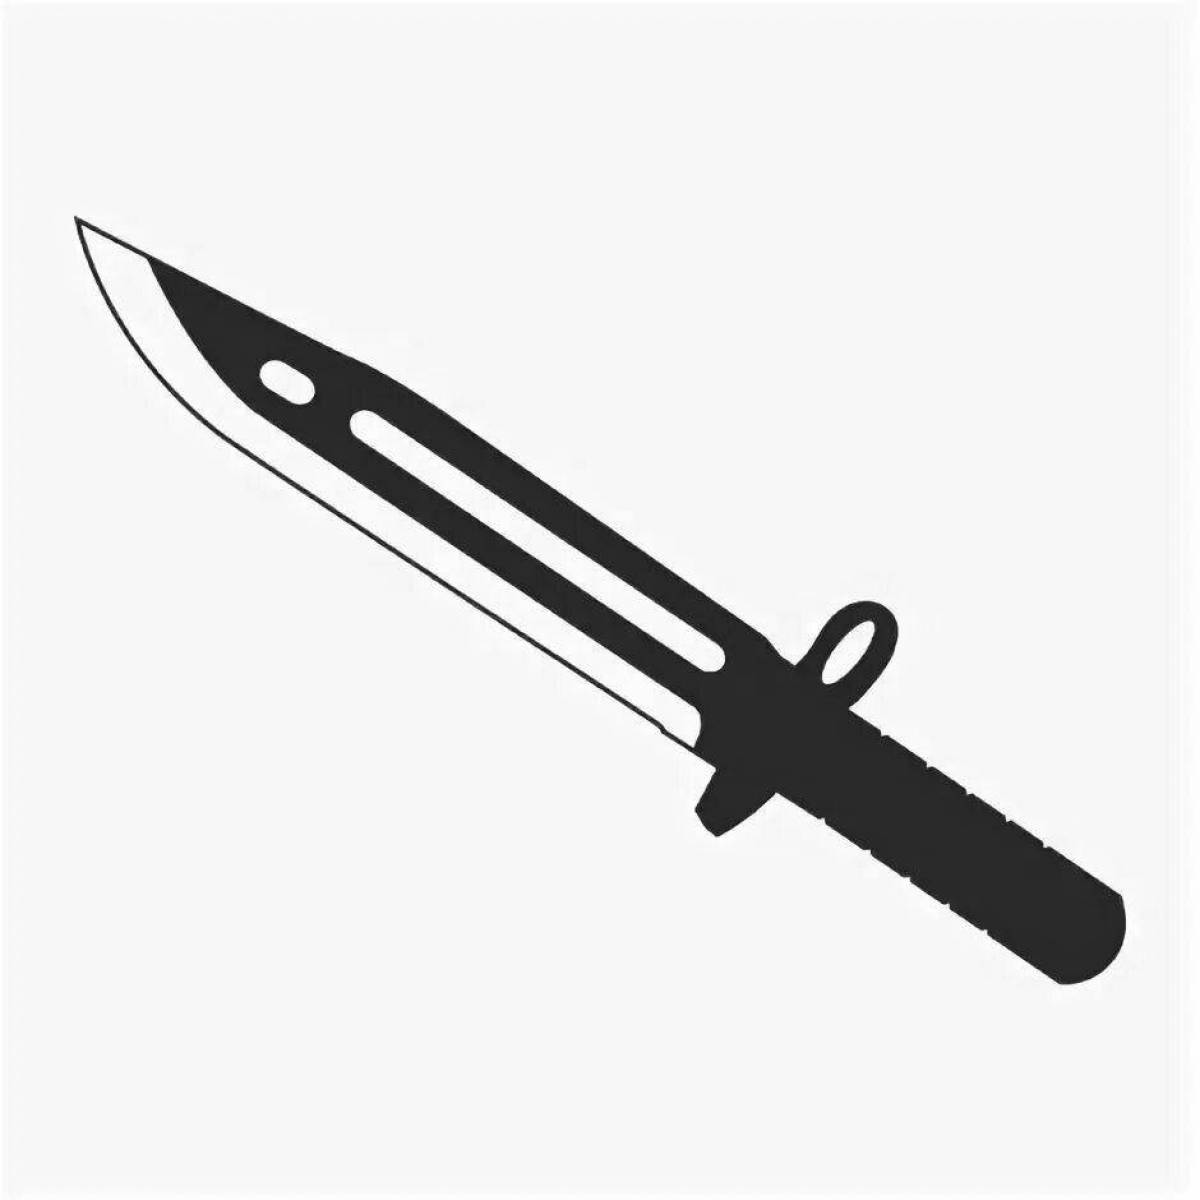 Легкие ножи standoff 2. М9 байонет чёрно белый. СТЕНДОФФ 2 нож м9. М9 нож стандофф 2. Раскраски стандофф 2 ножи м9 байонет.